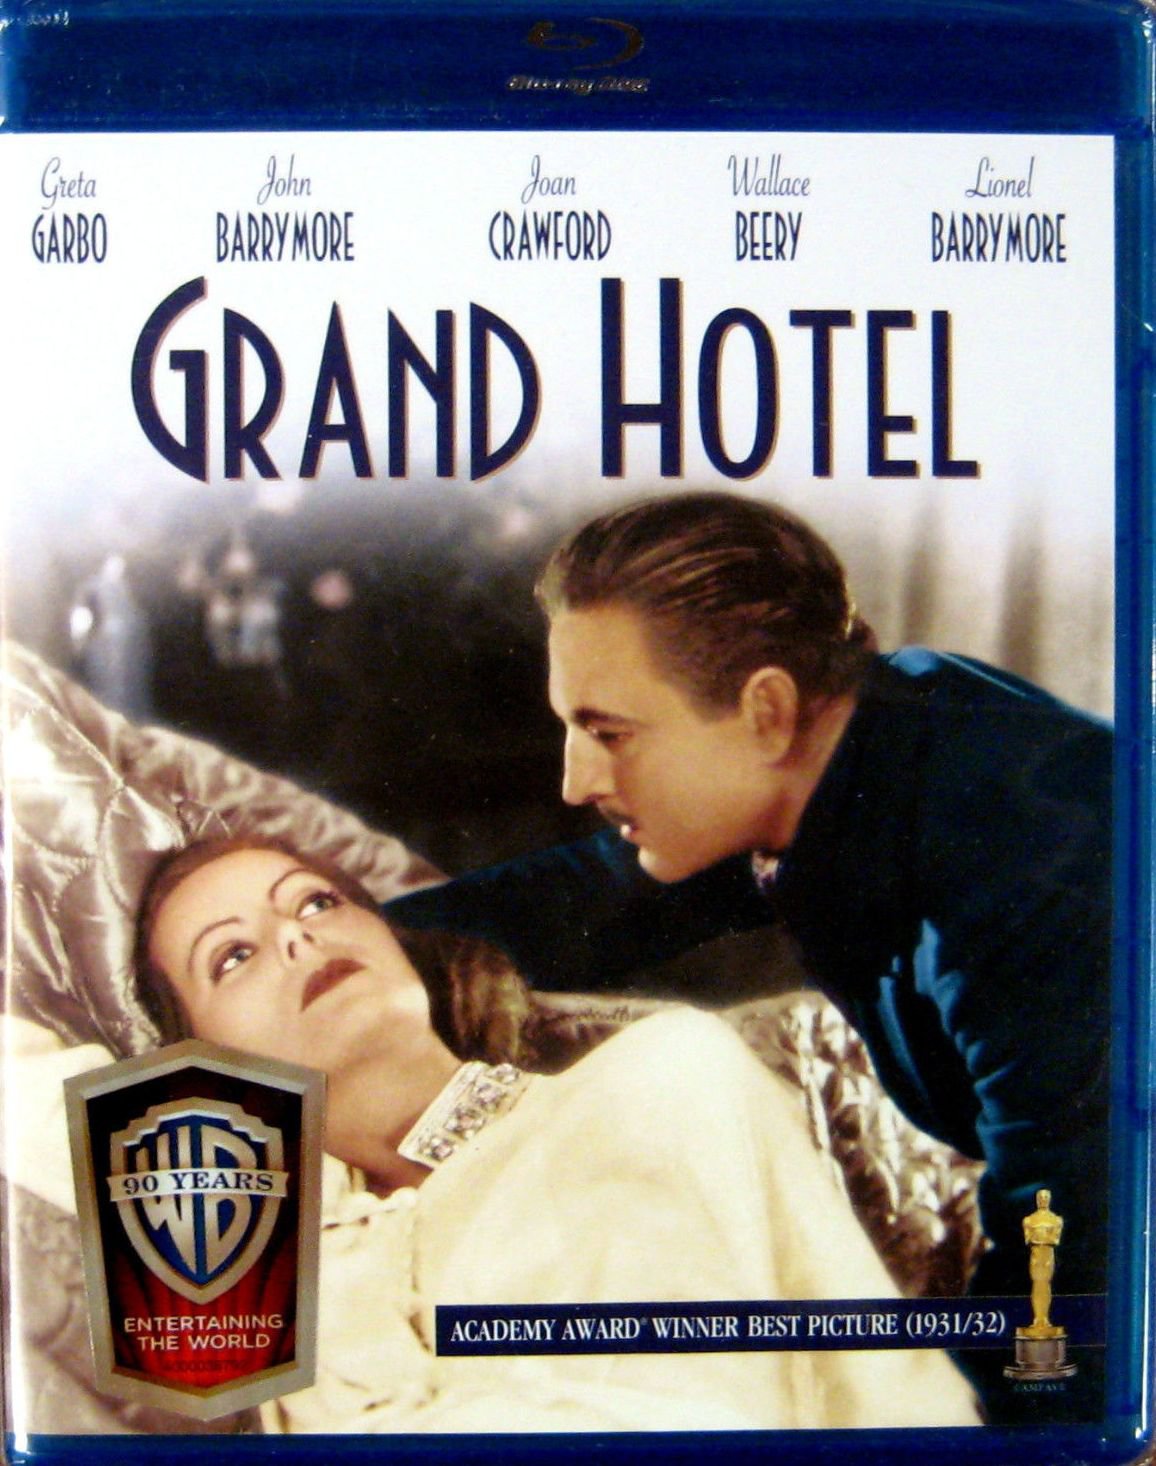 Grand Hotel (Blu-ray) Greta Garbo, John Barrymore, Joan Crawford